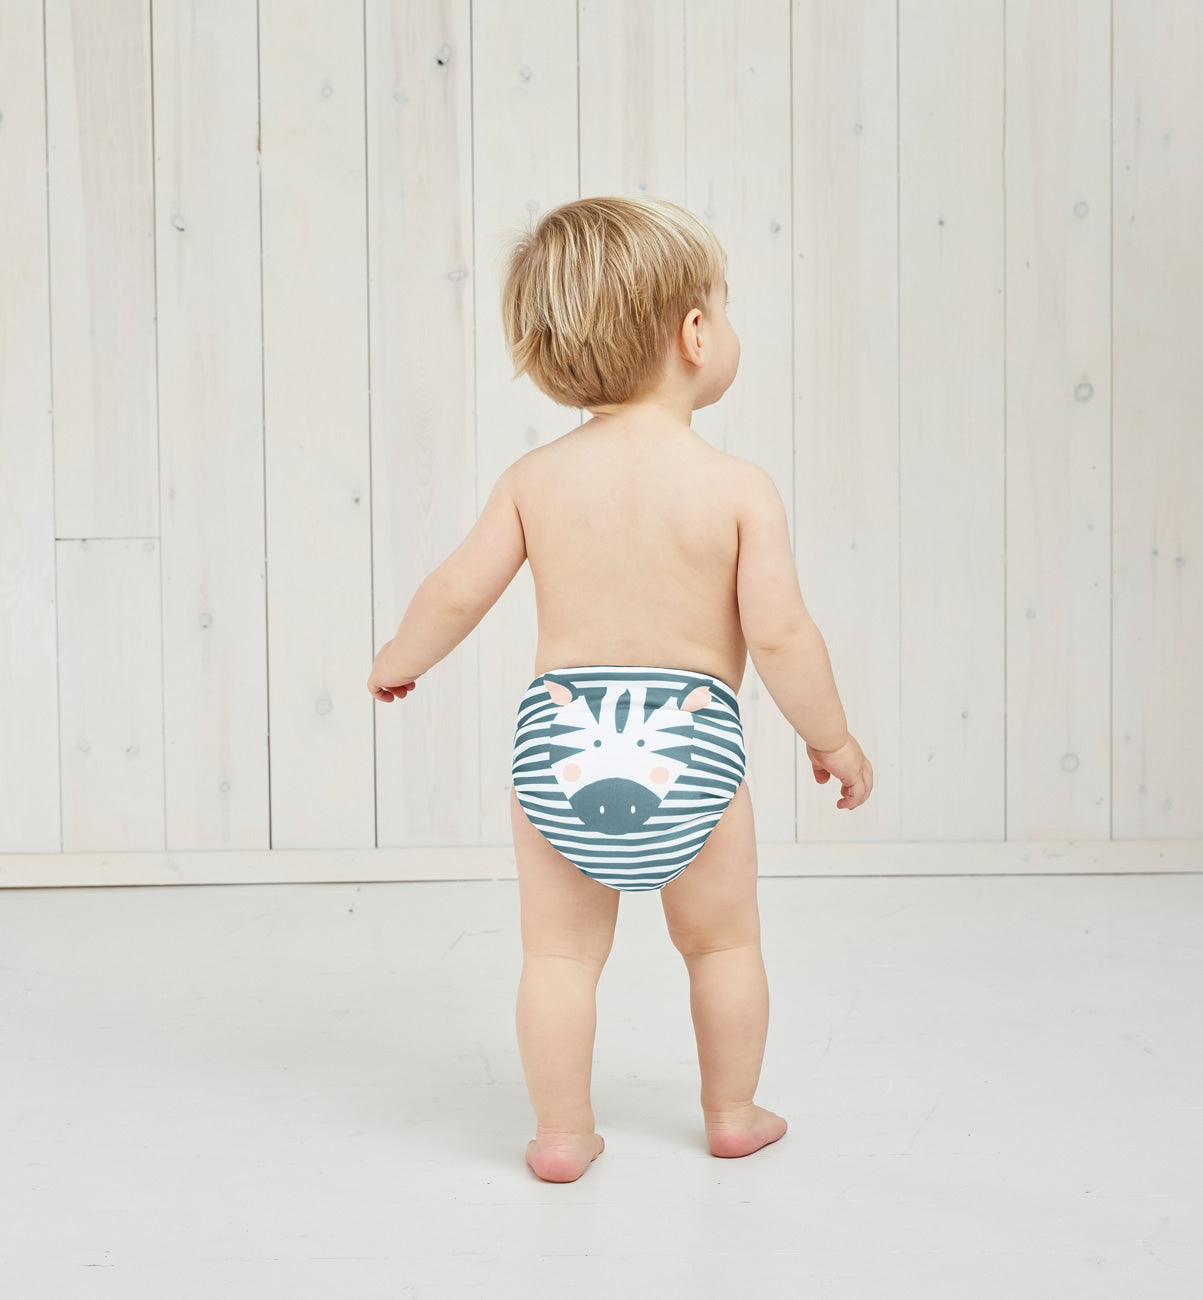 reusable cloth diaper